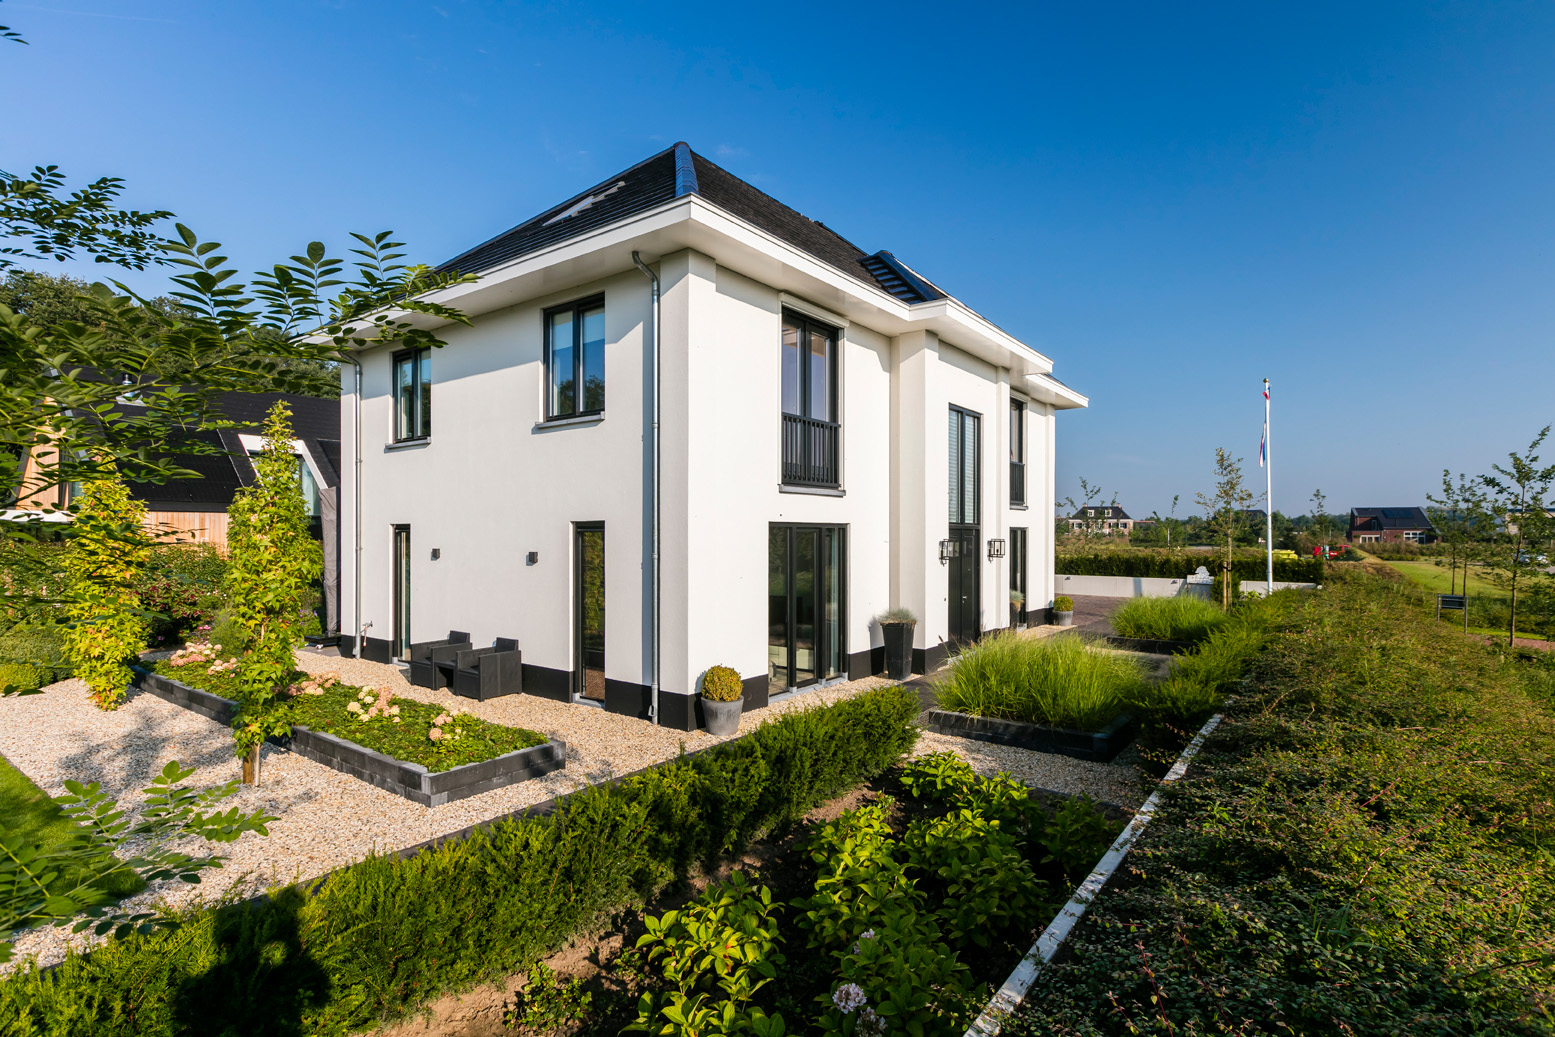 Foto: Woning bouwen   Huis bouwen   Villa Lindepijlstaart te Zwolle   Architectuurwonen 4